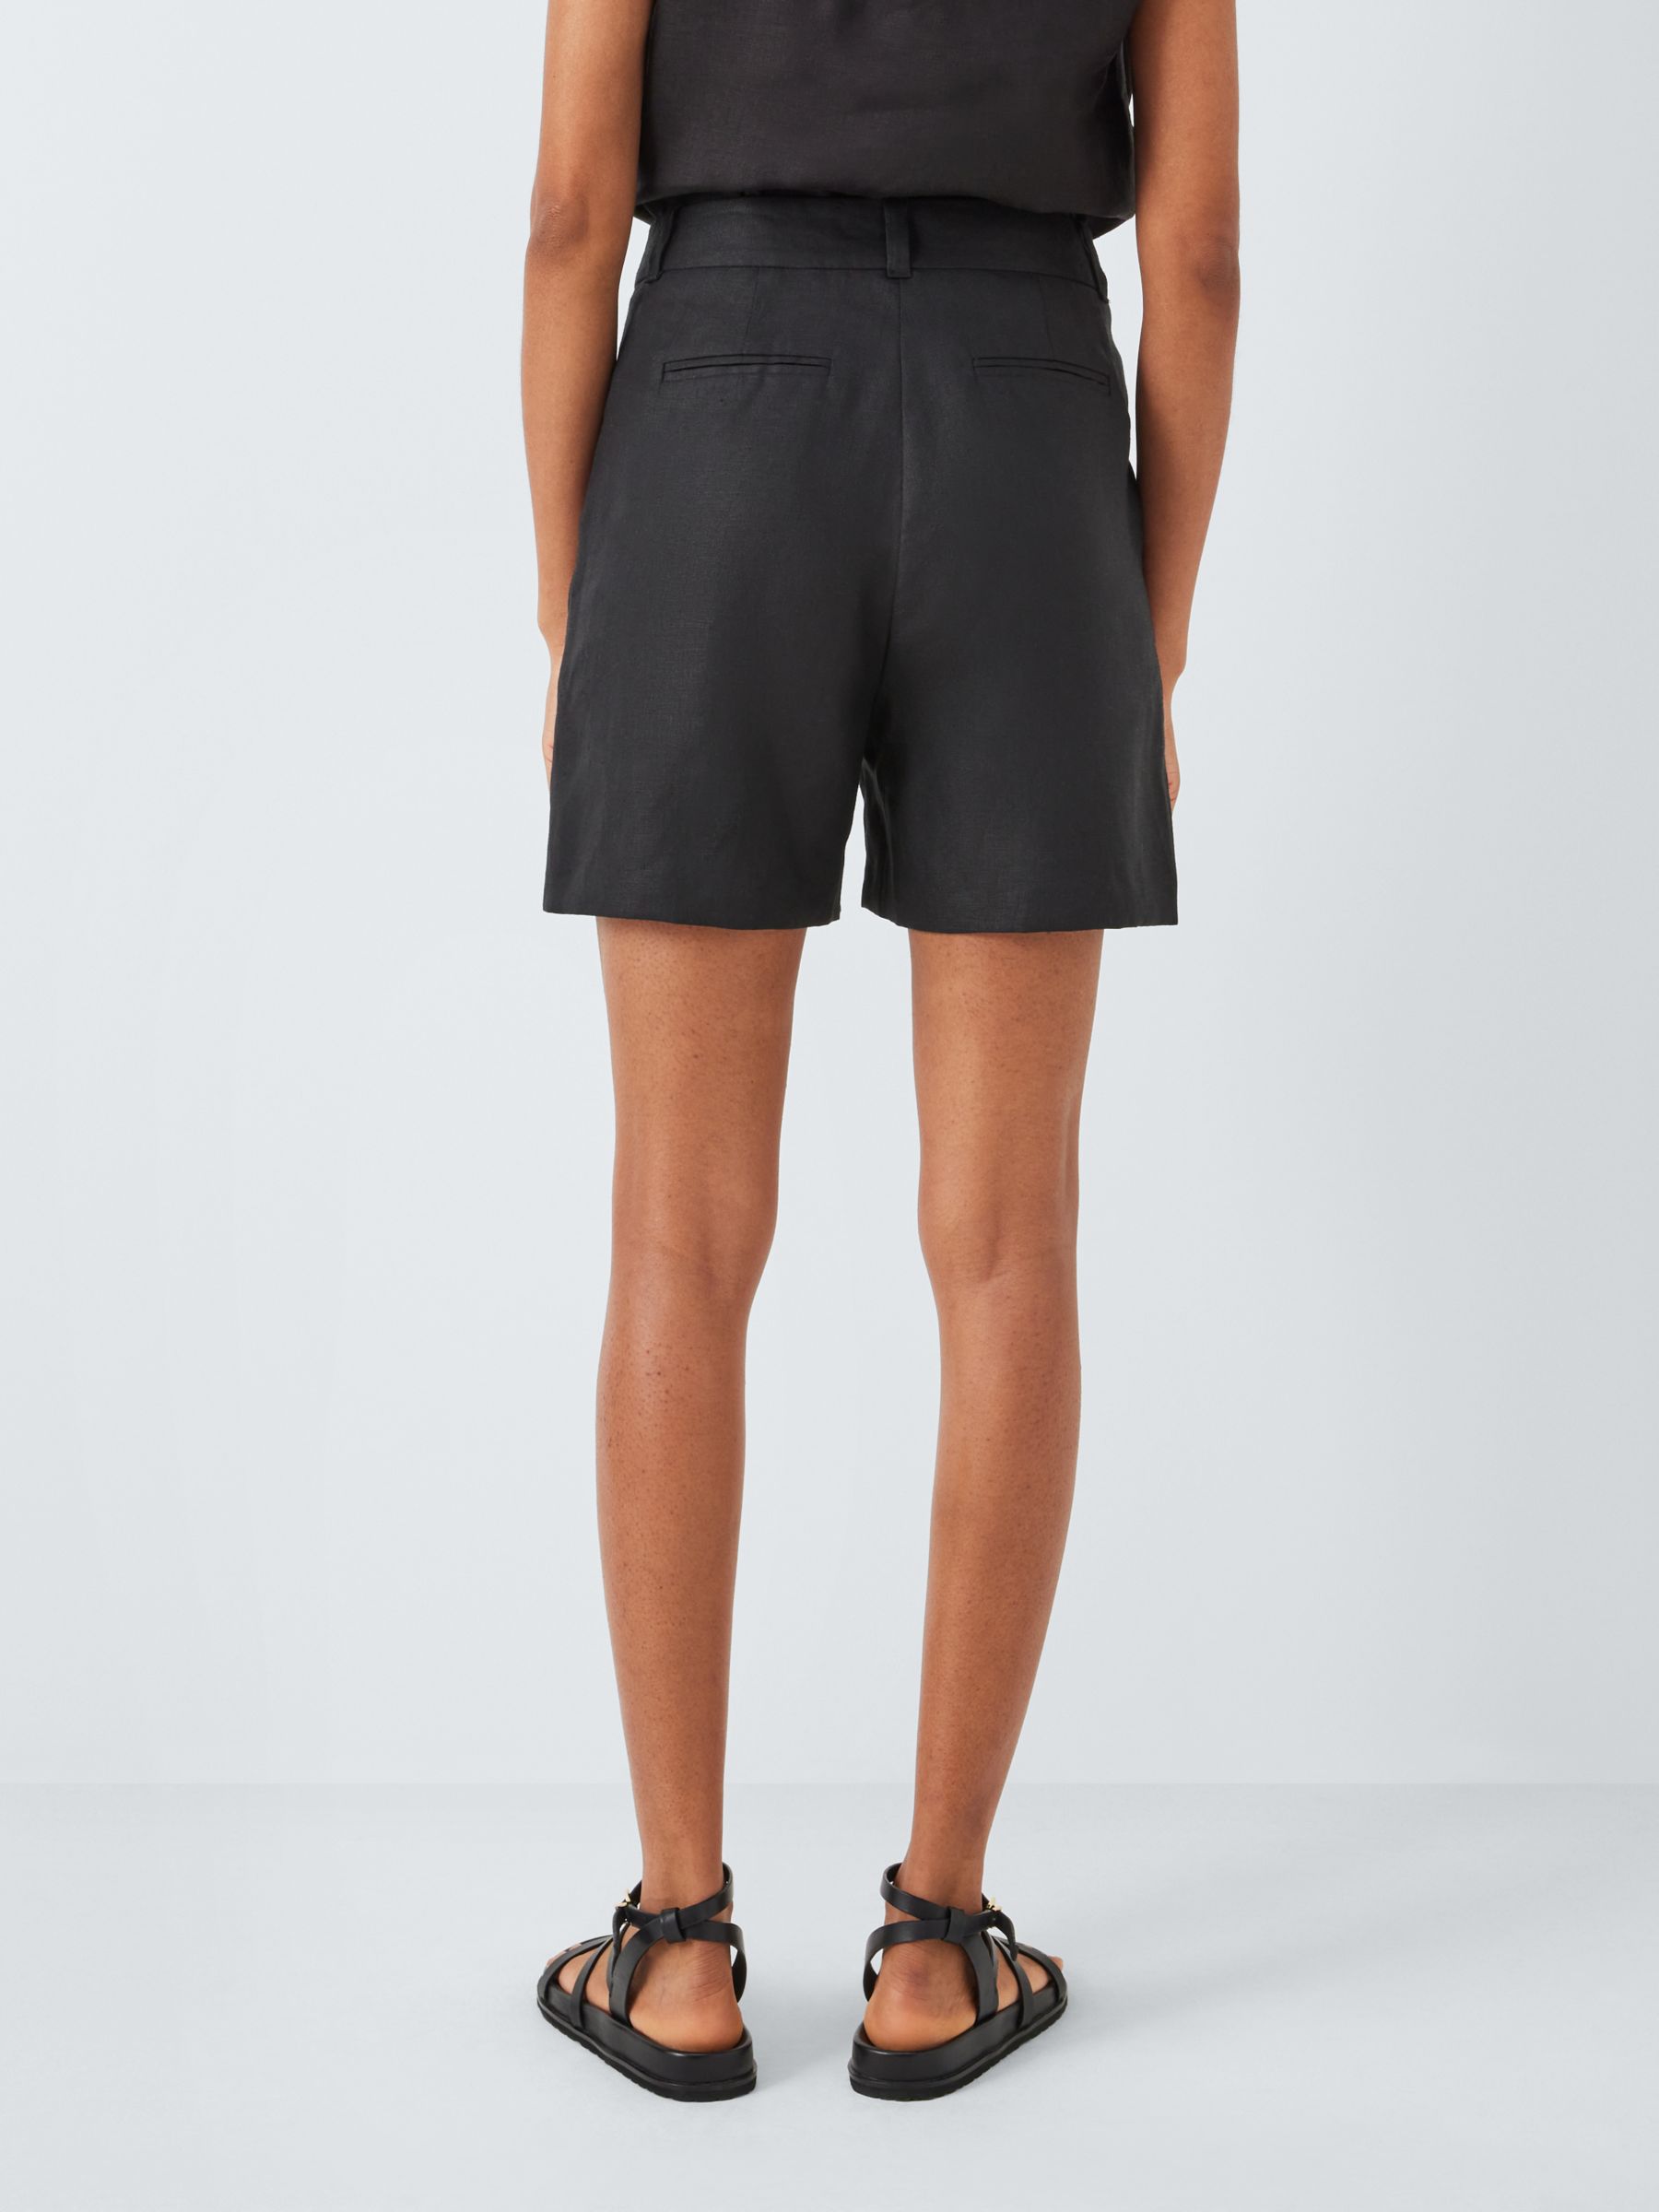 John Lewis Linen Shorts, Black, 8